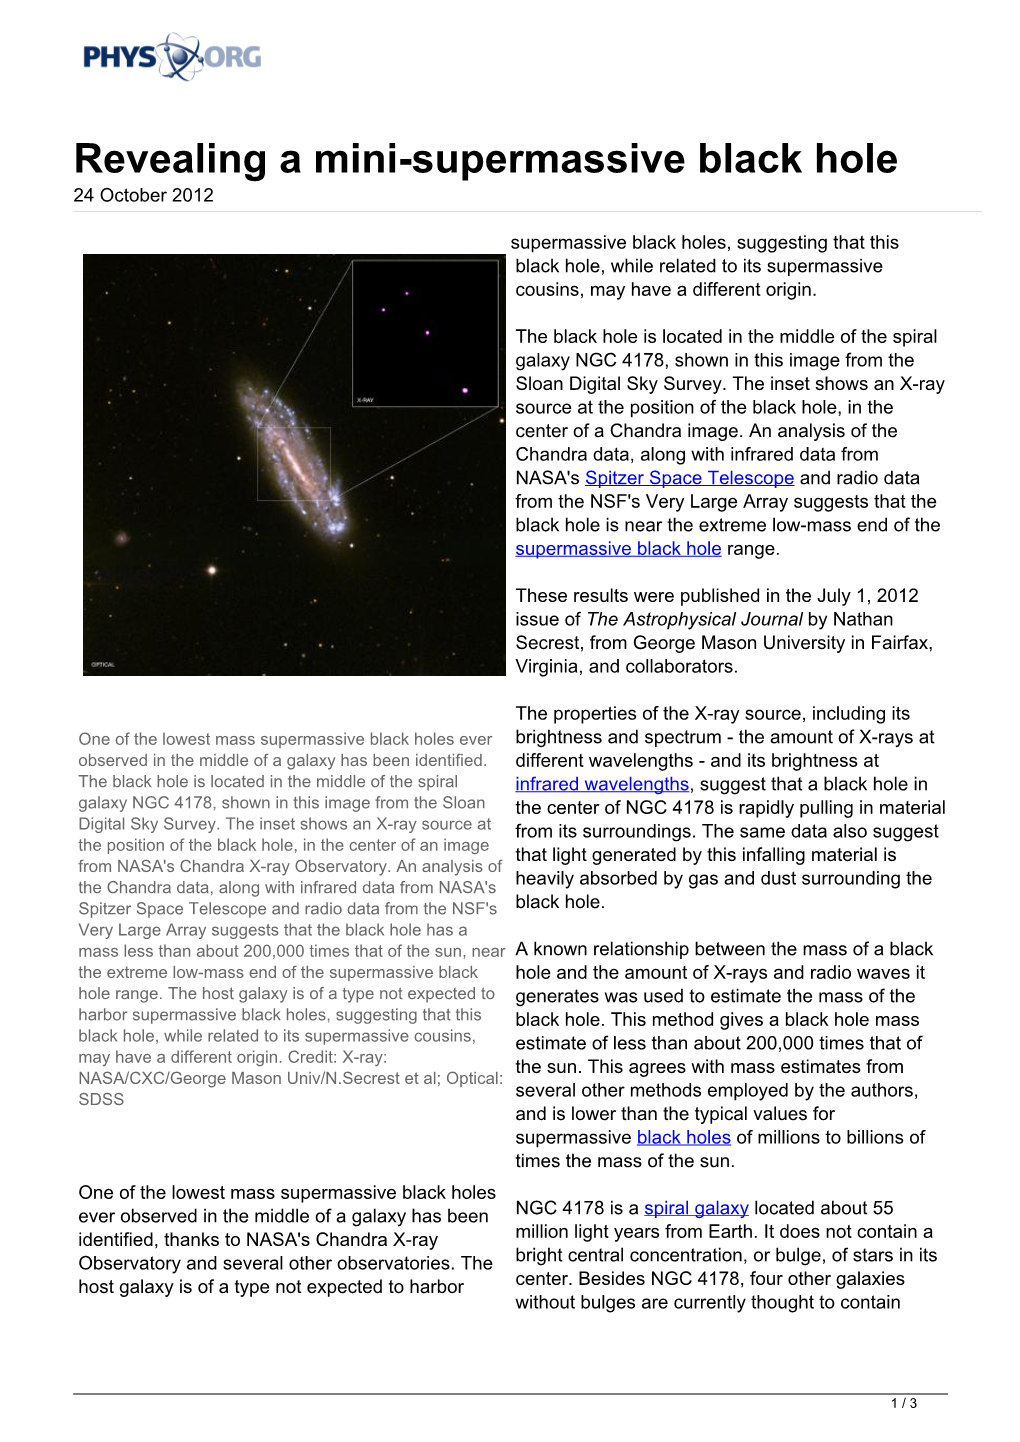 Revealing a Mini-Supermassive Black Hole 24 October 2012